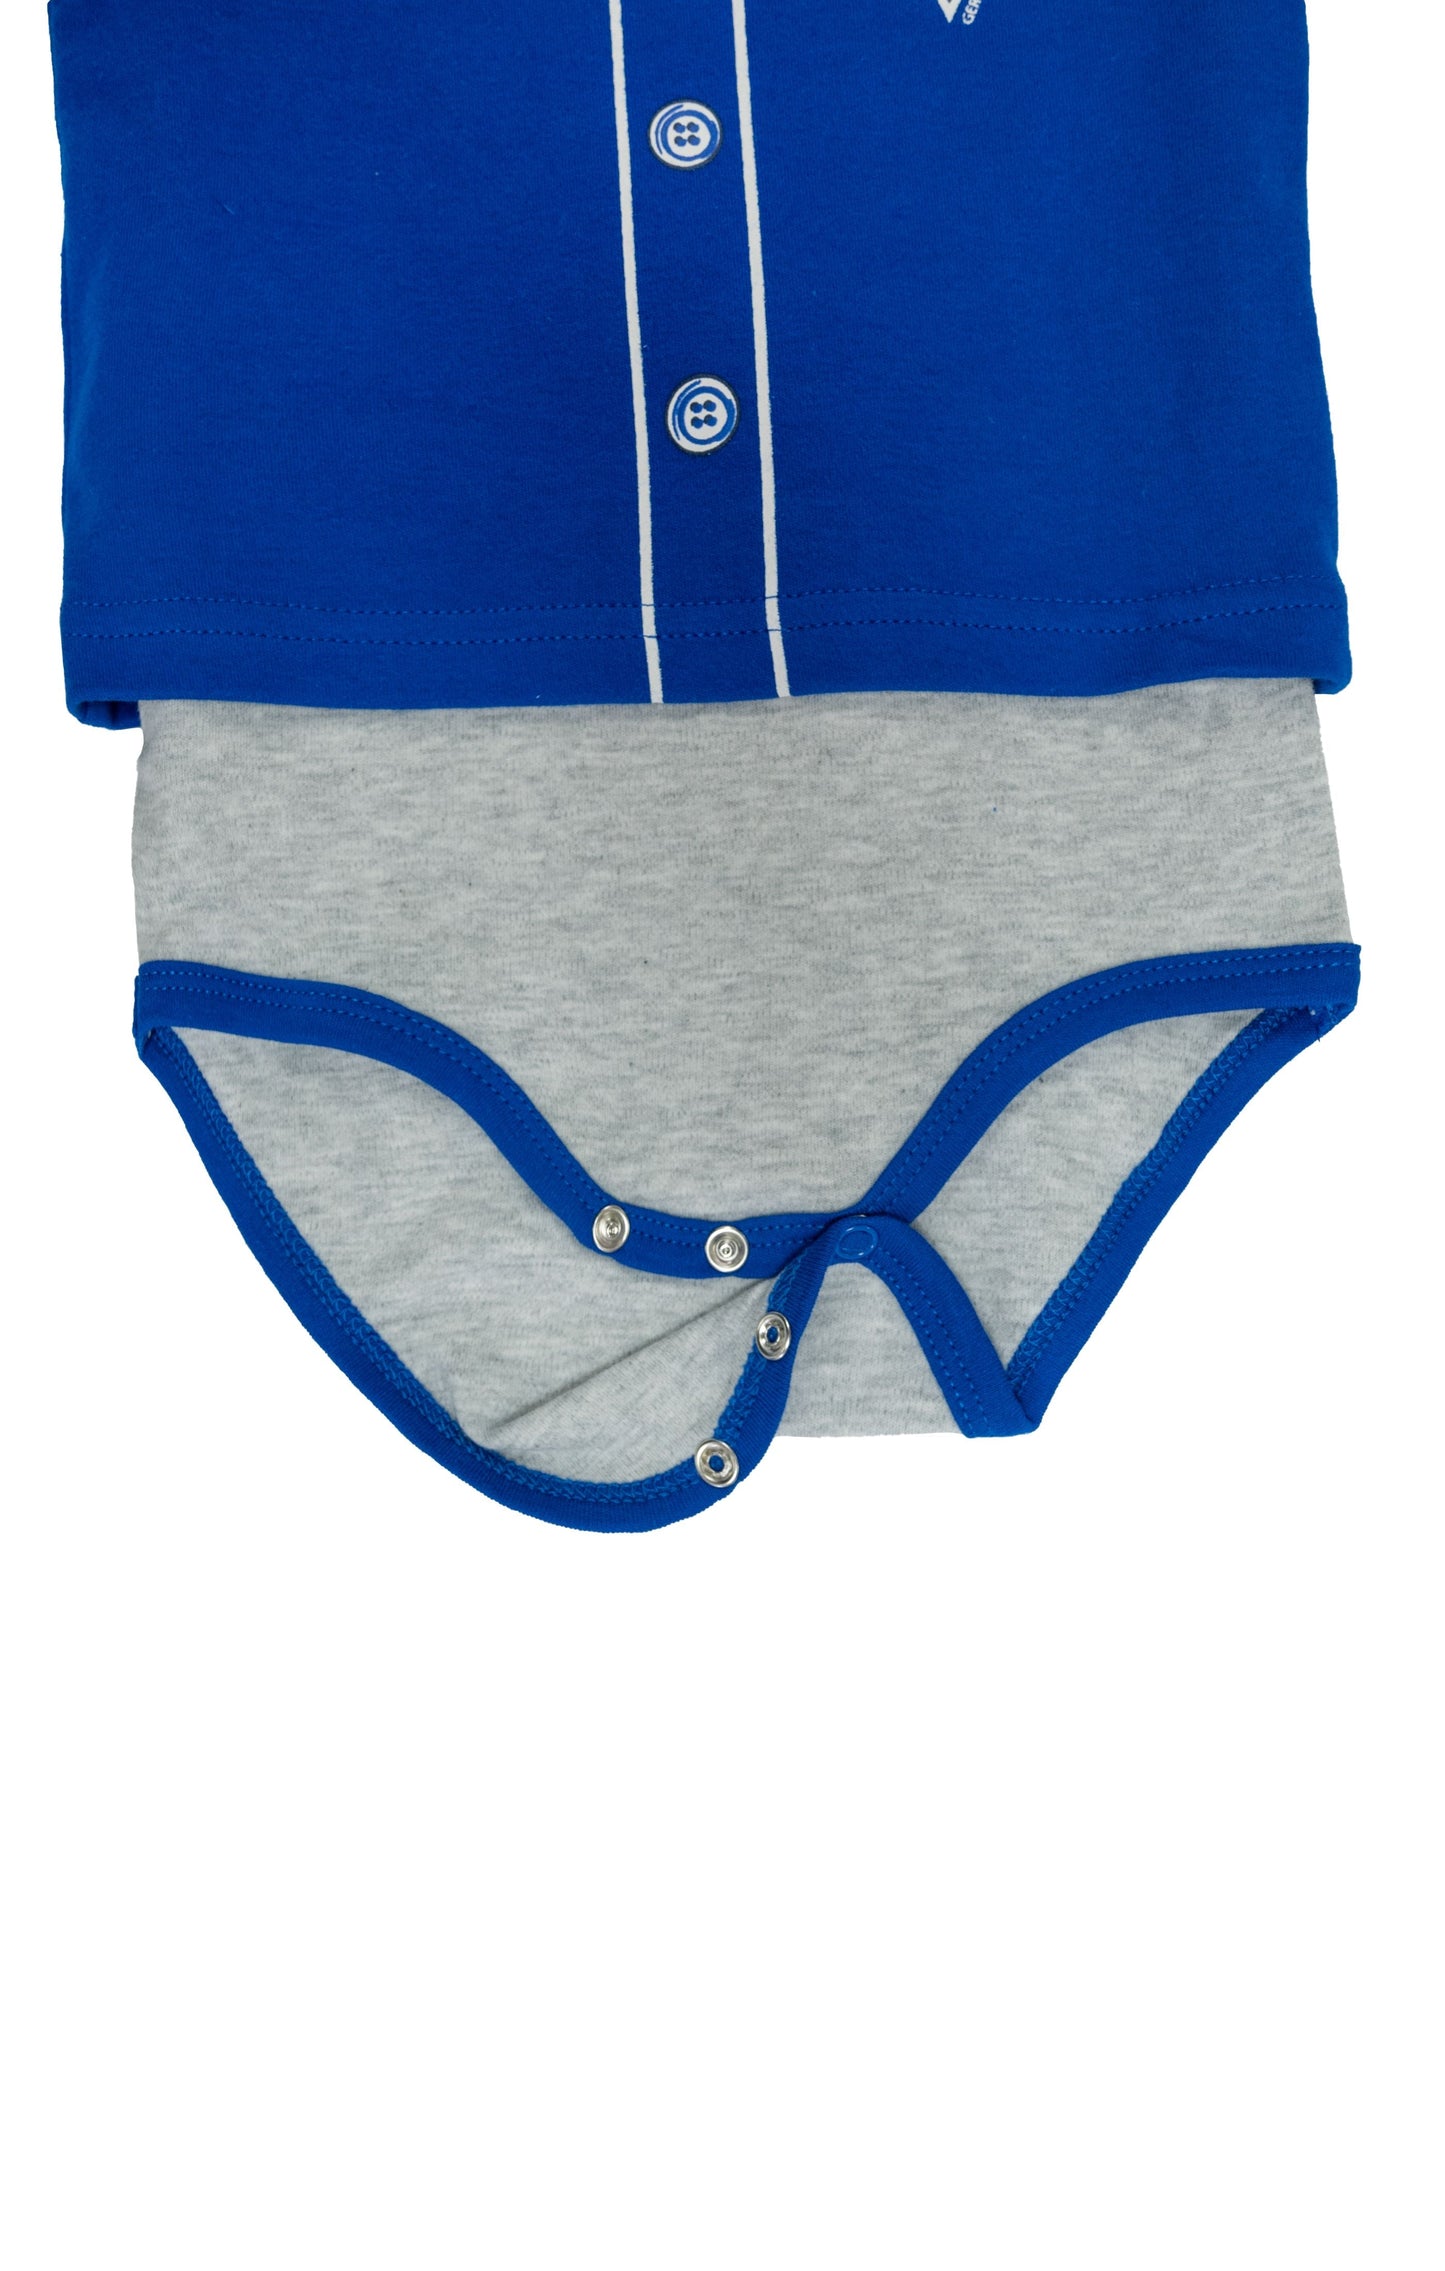 MLB Toronto Blue Jays T-Shirt Baby Onesie Bodysuit With Snap Closure